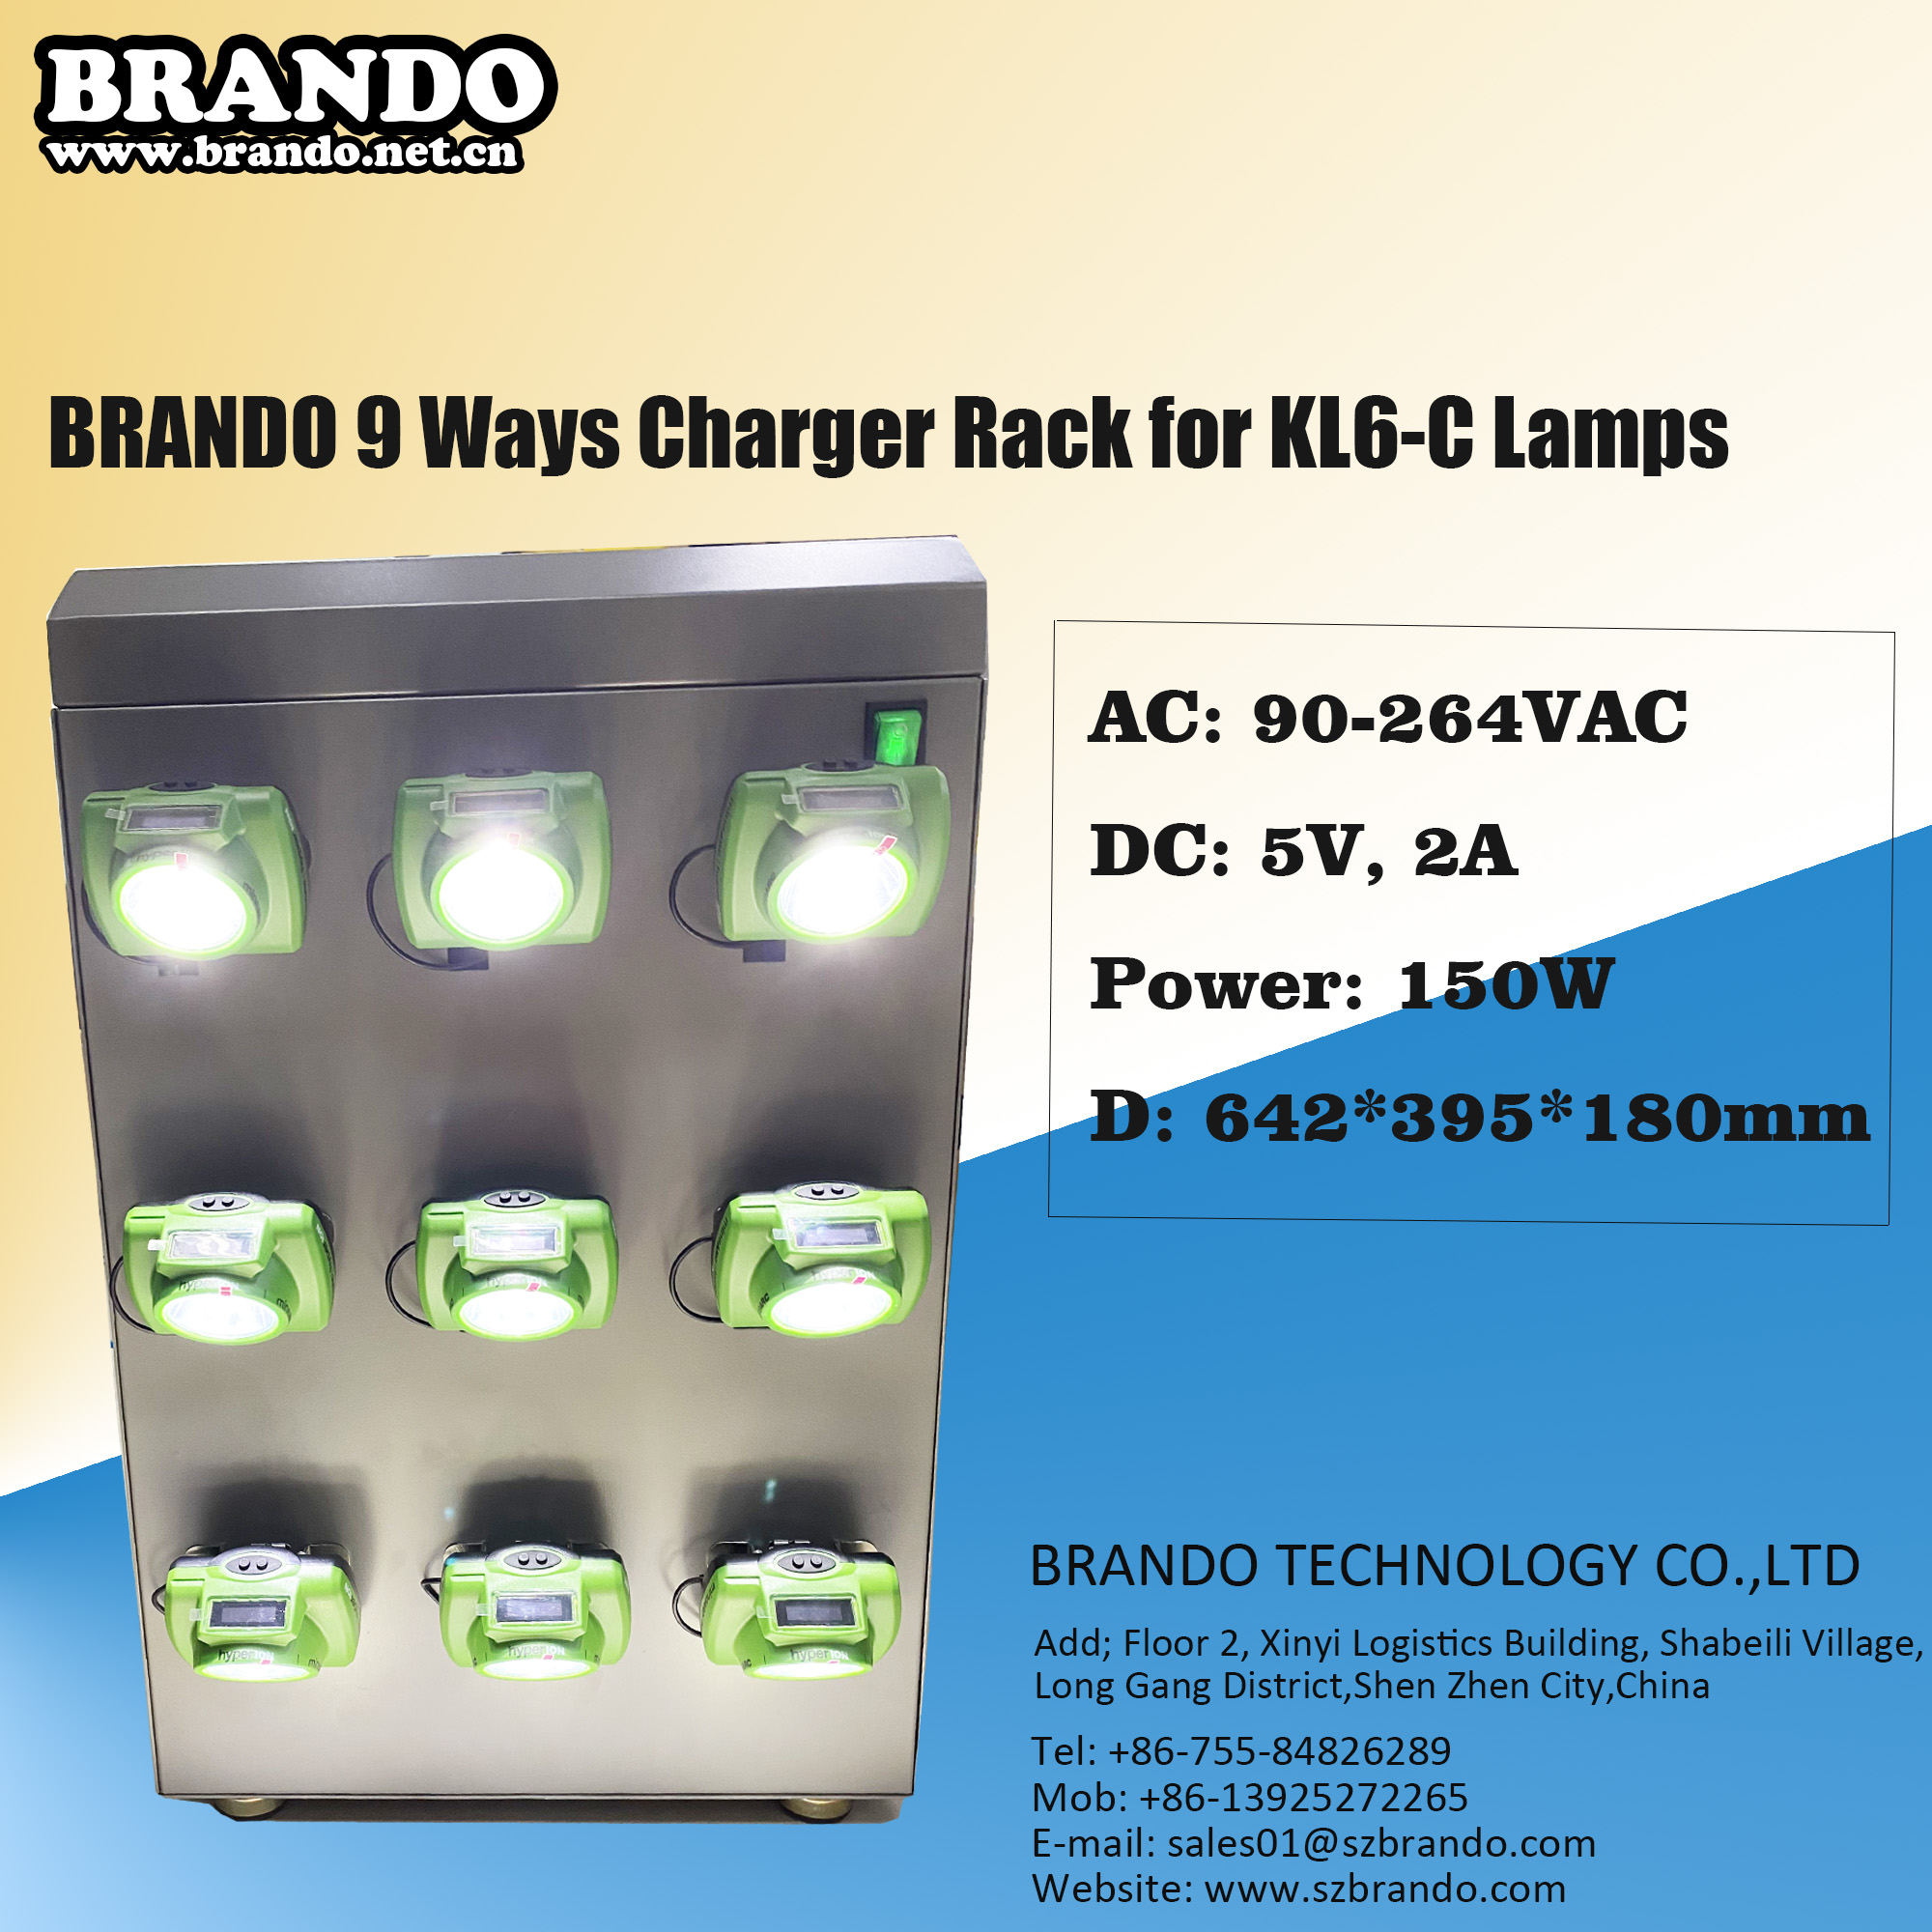 BRANDO cordless lamp charging rack